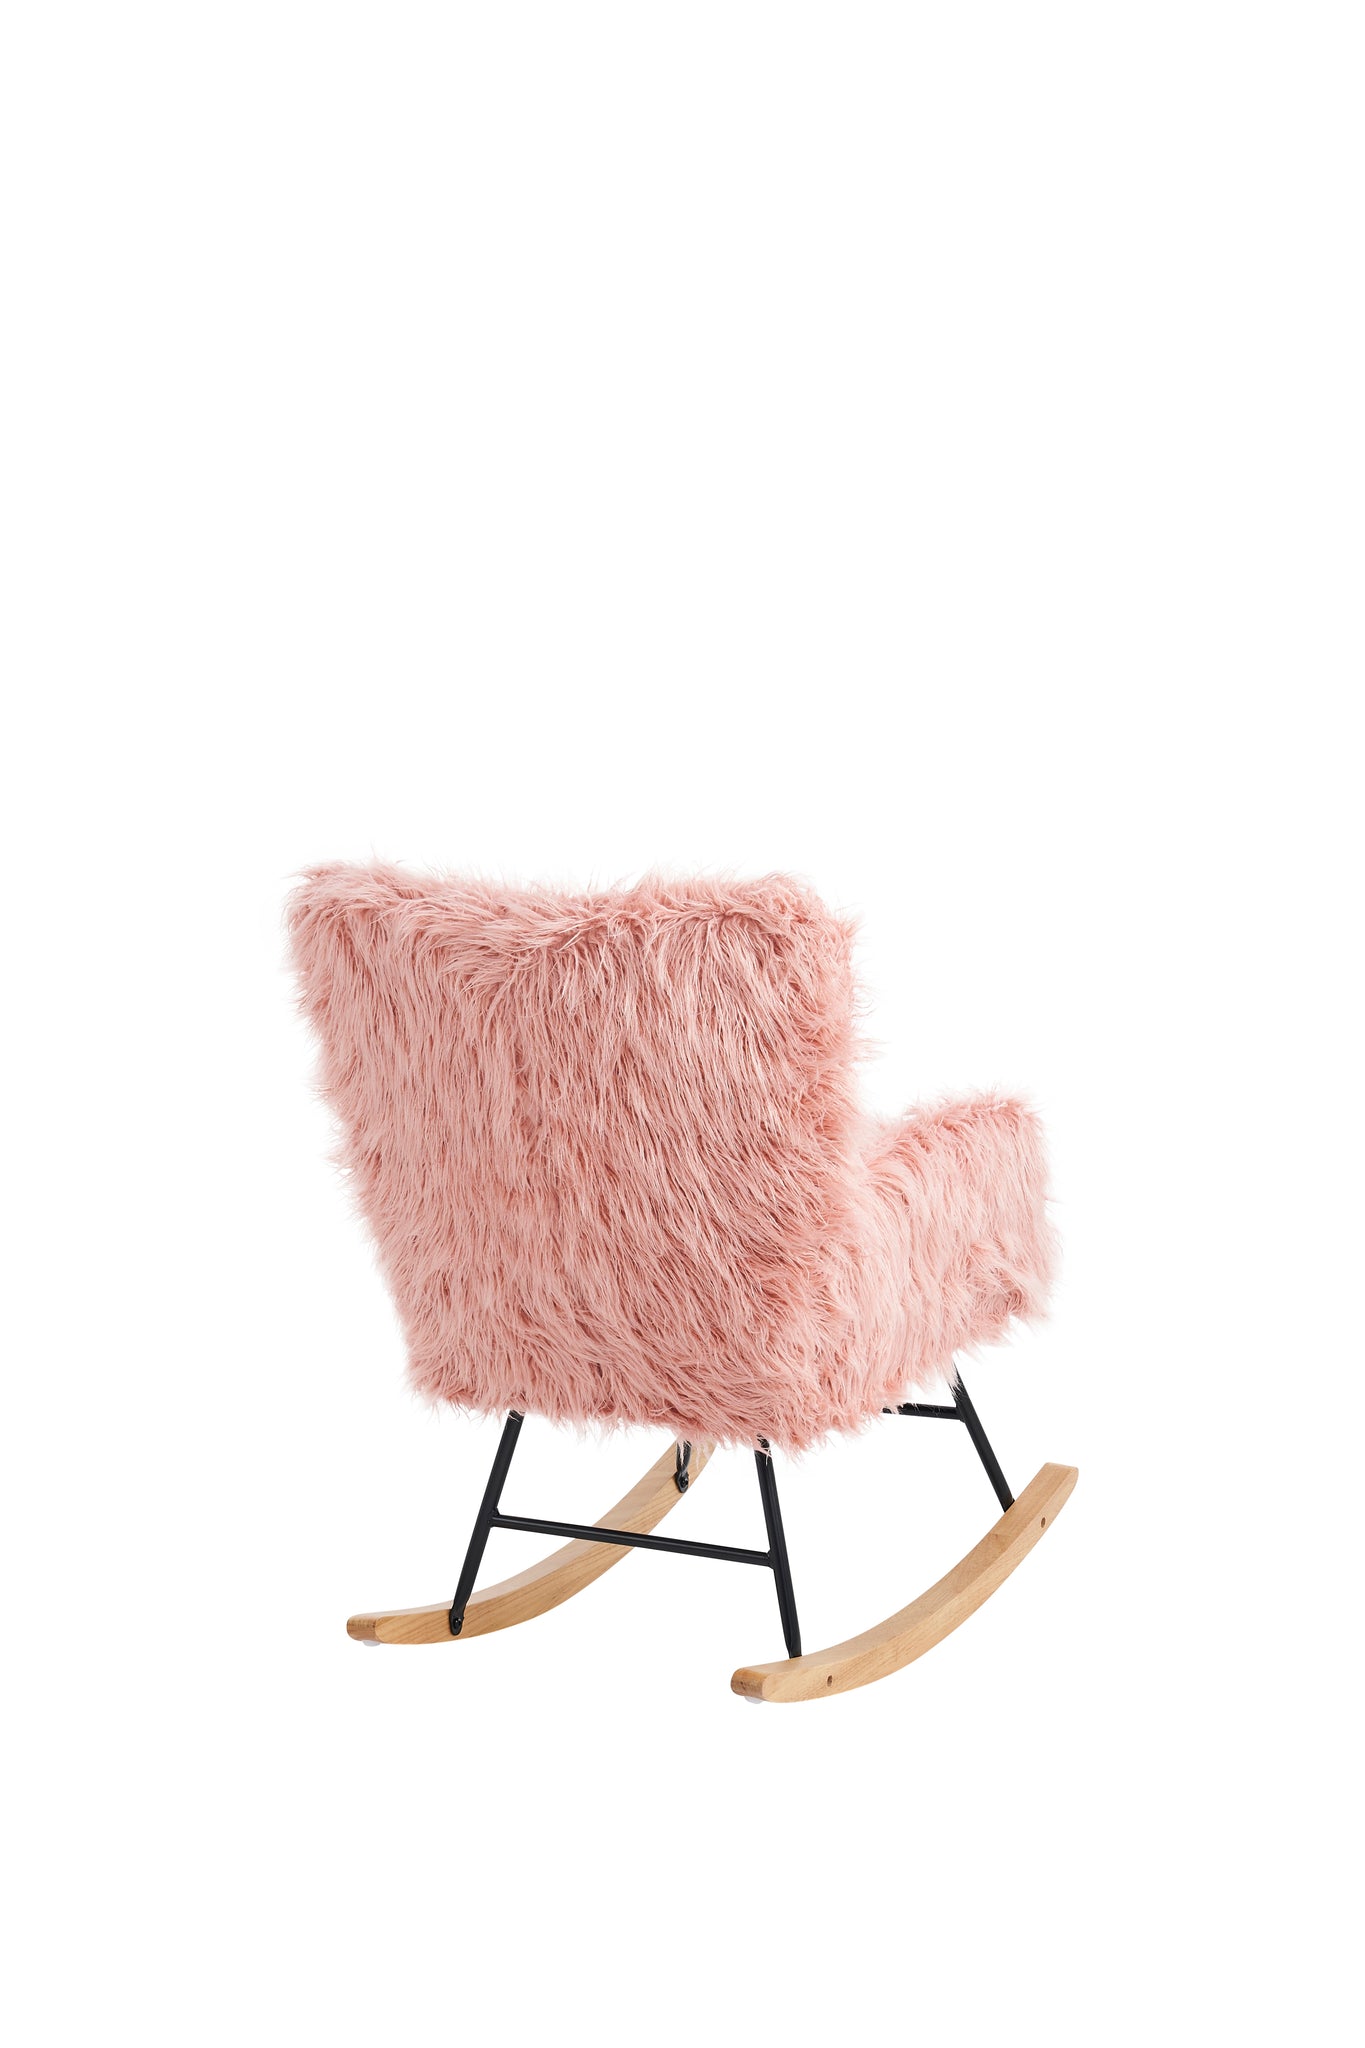 Rocking Chair Nursery, Solid Wood Legs Reading Chair pink-primary living space-sponge-modern-rocking